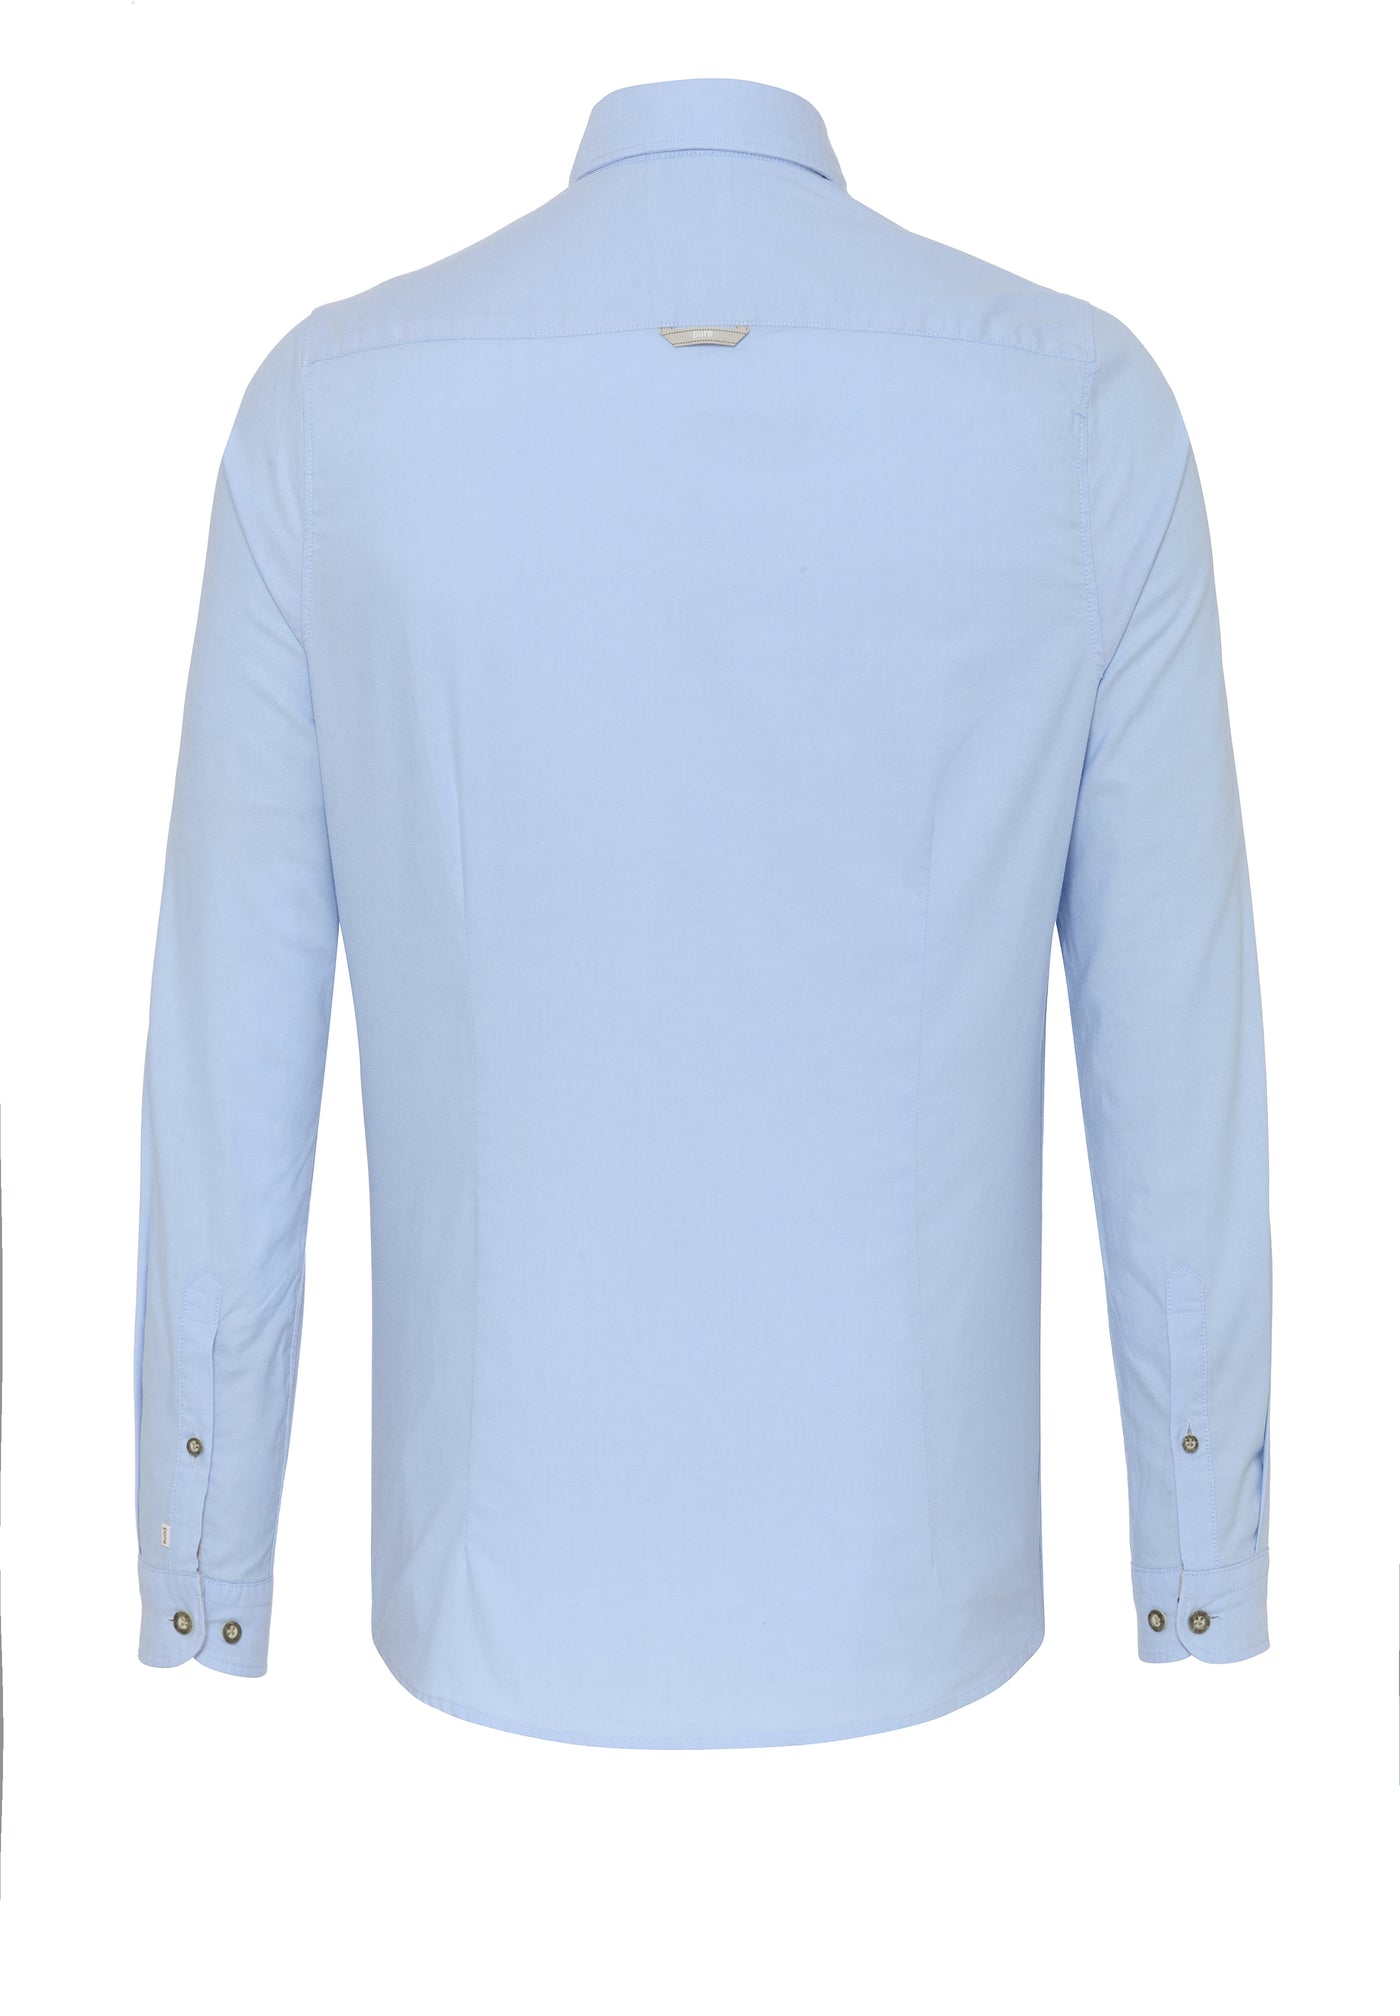 5010-21301 - Tracht Hemd slim fit - blau